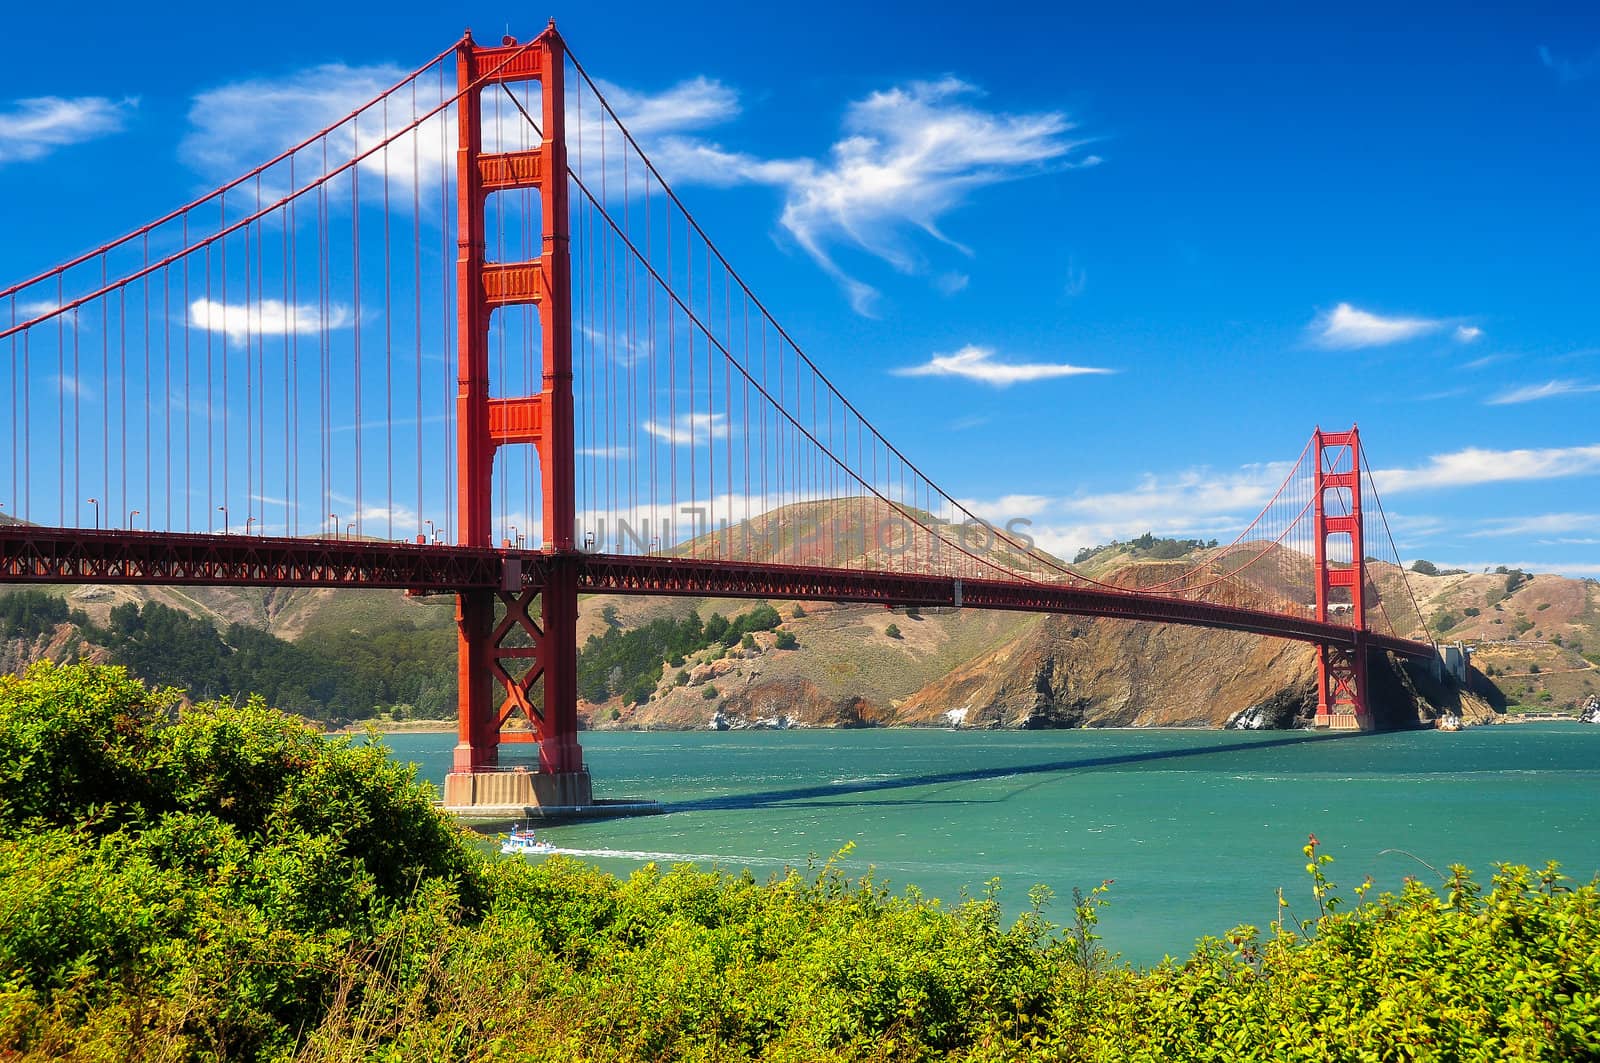 Golden gate bridge vivid day landscape, San Francisco by martinm303